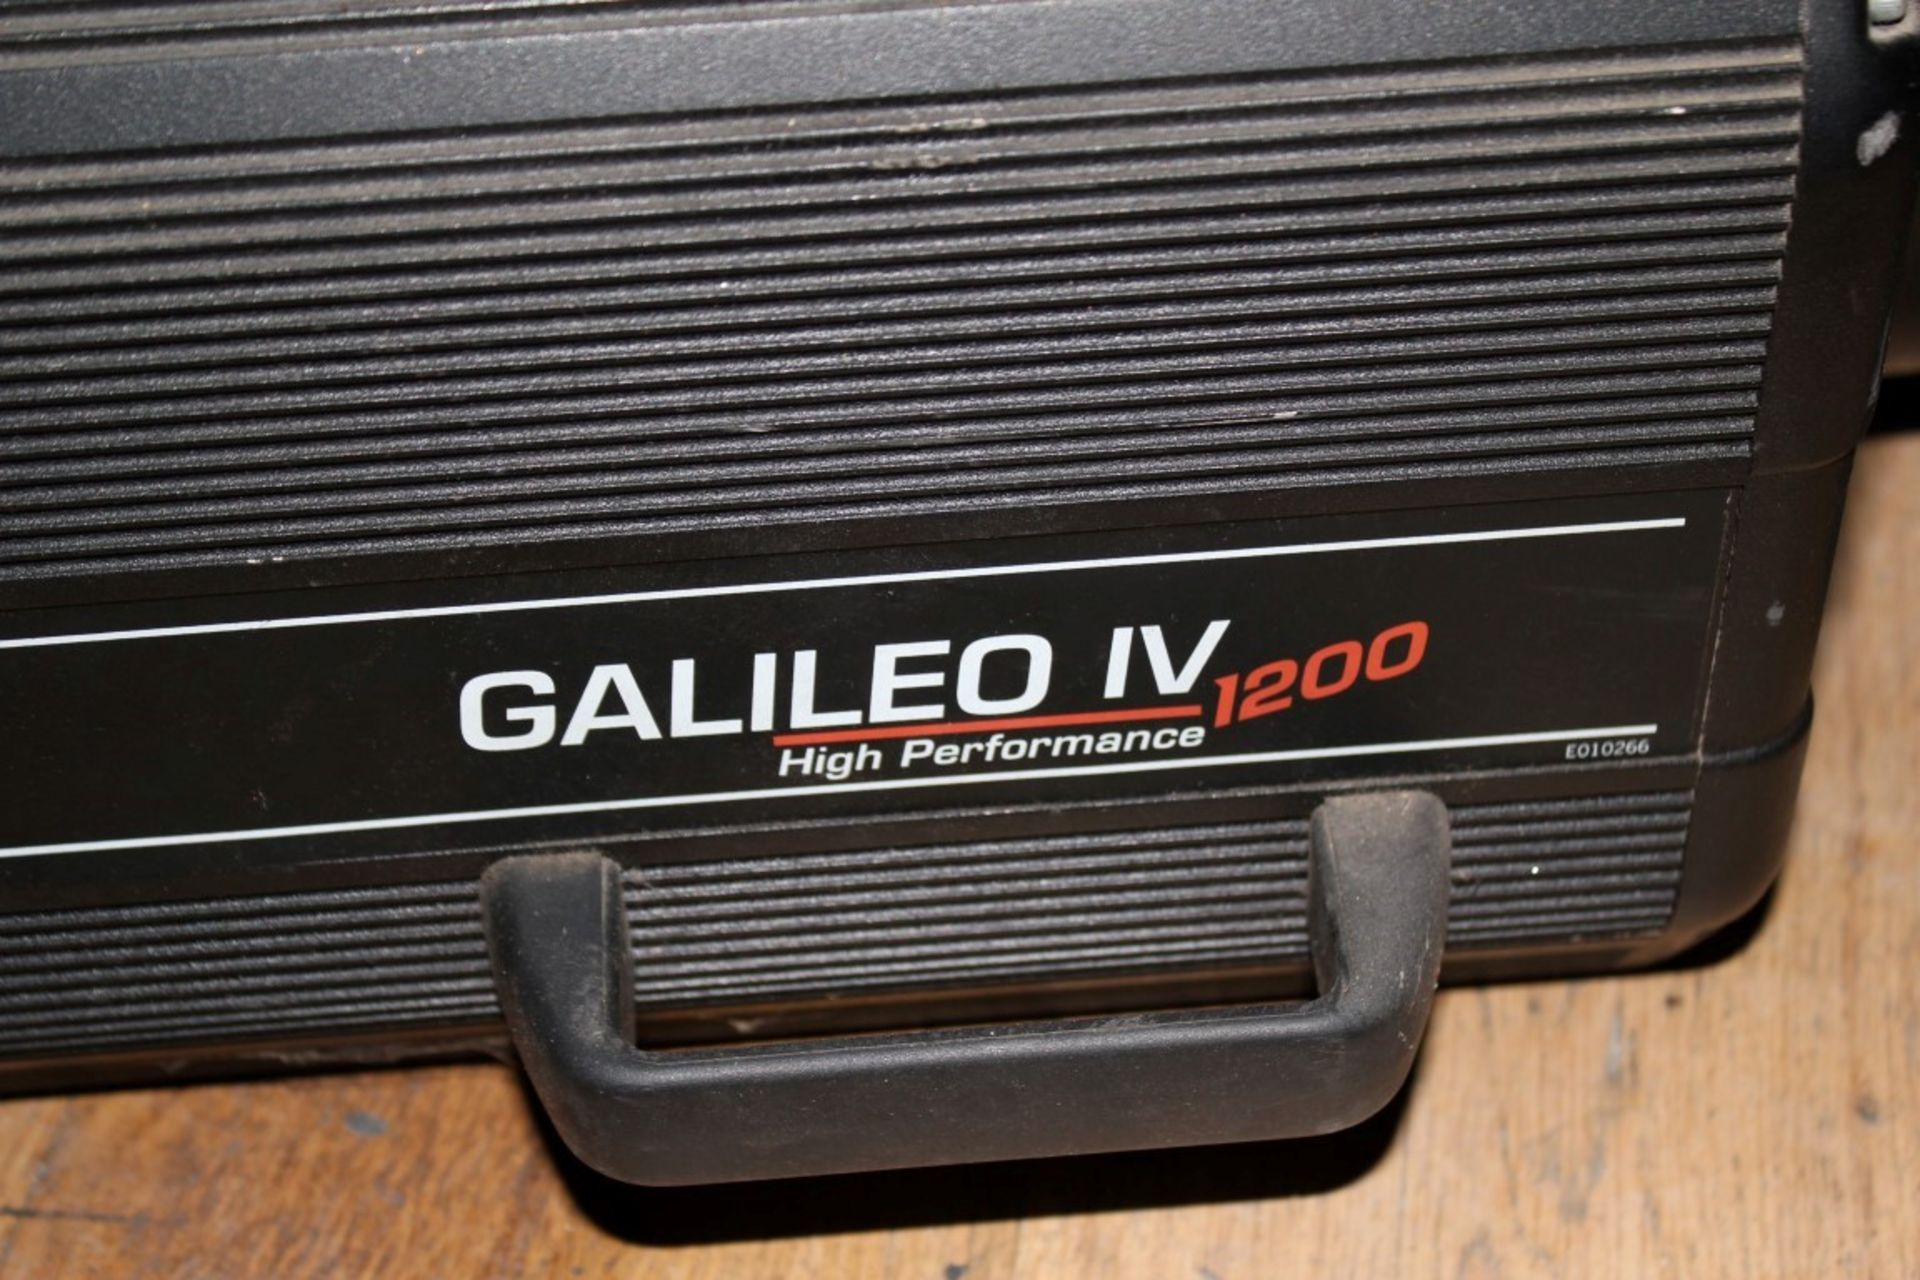 1 x Galileo IV 1200 Automated Luminaire Night Club Stage Lighting Units - Untested - CL090 - Ref - Image 2 of 7